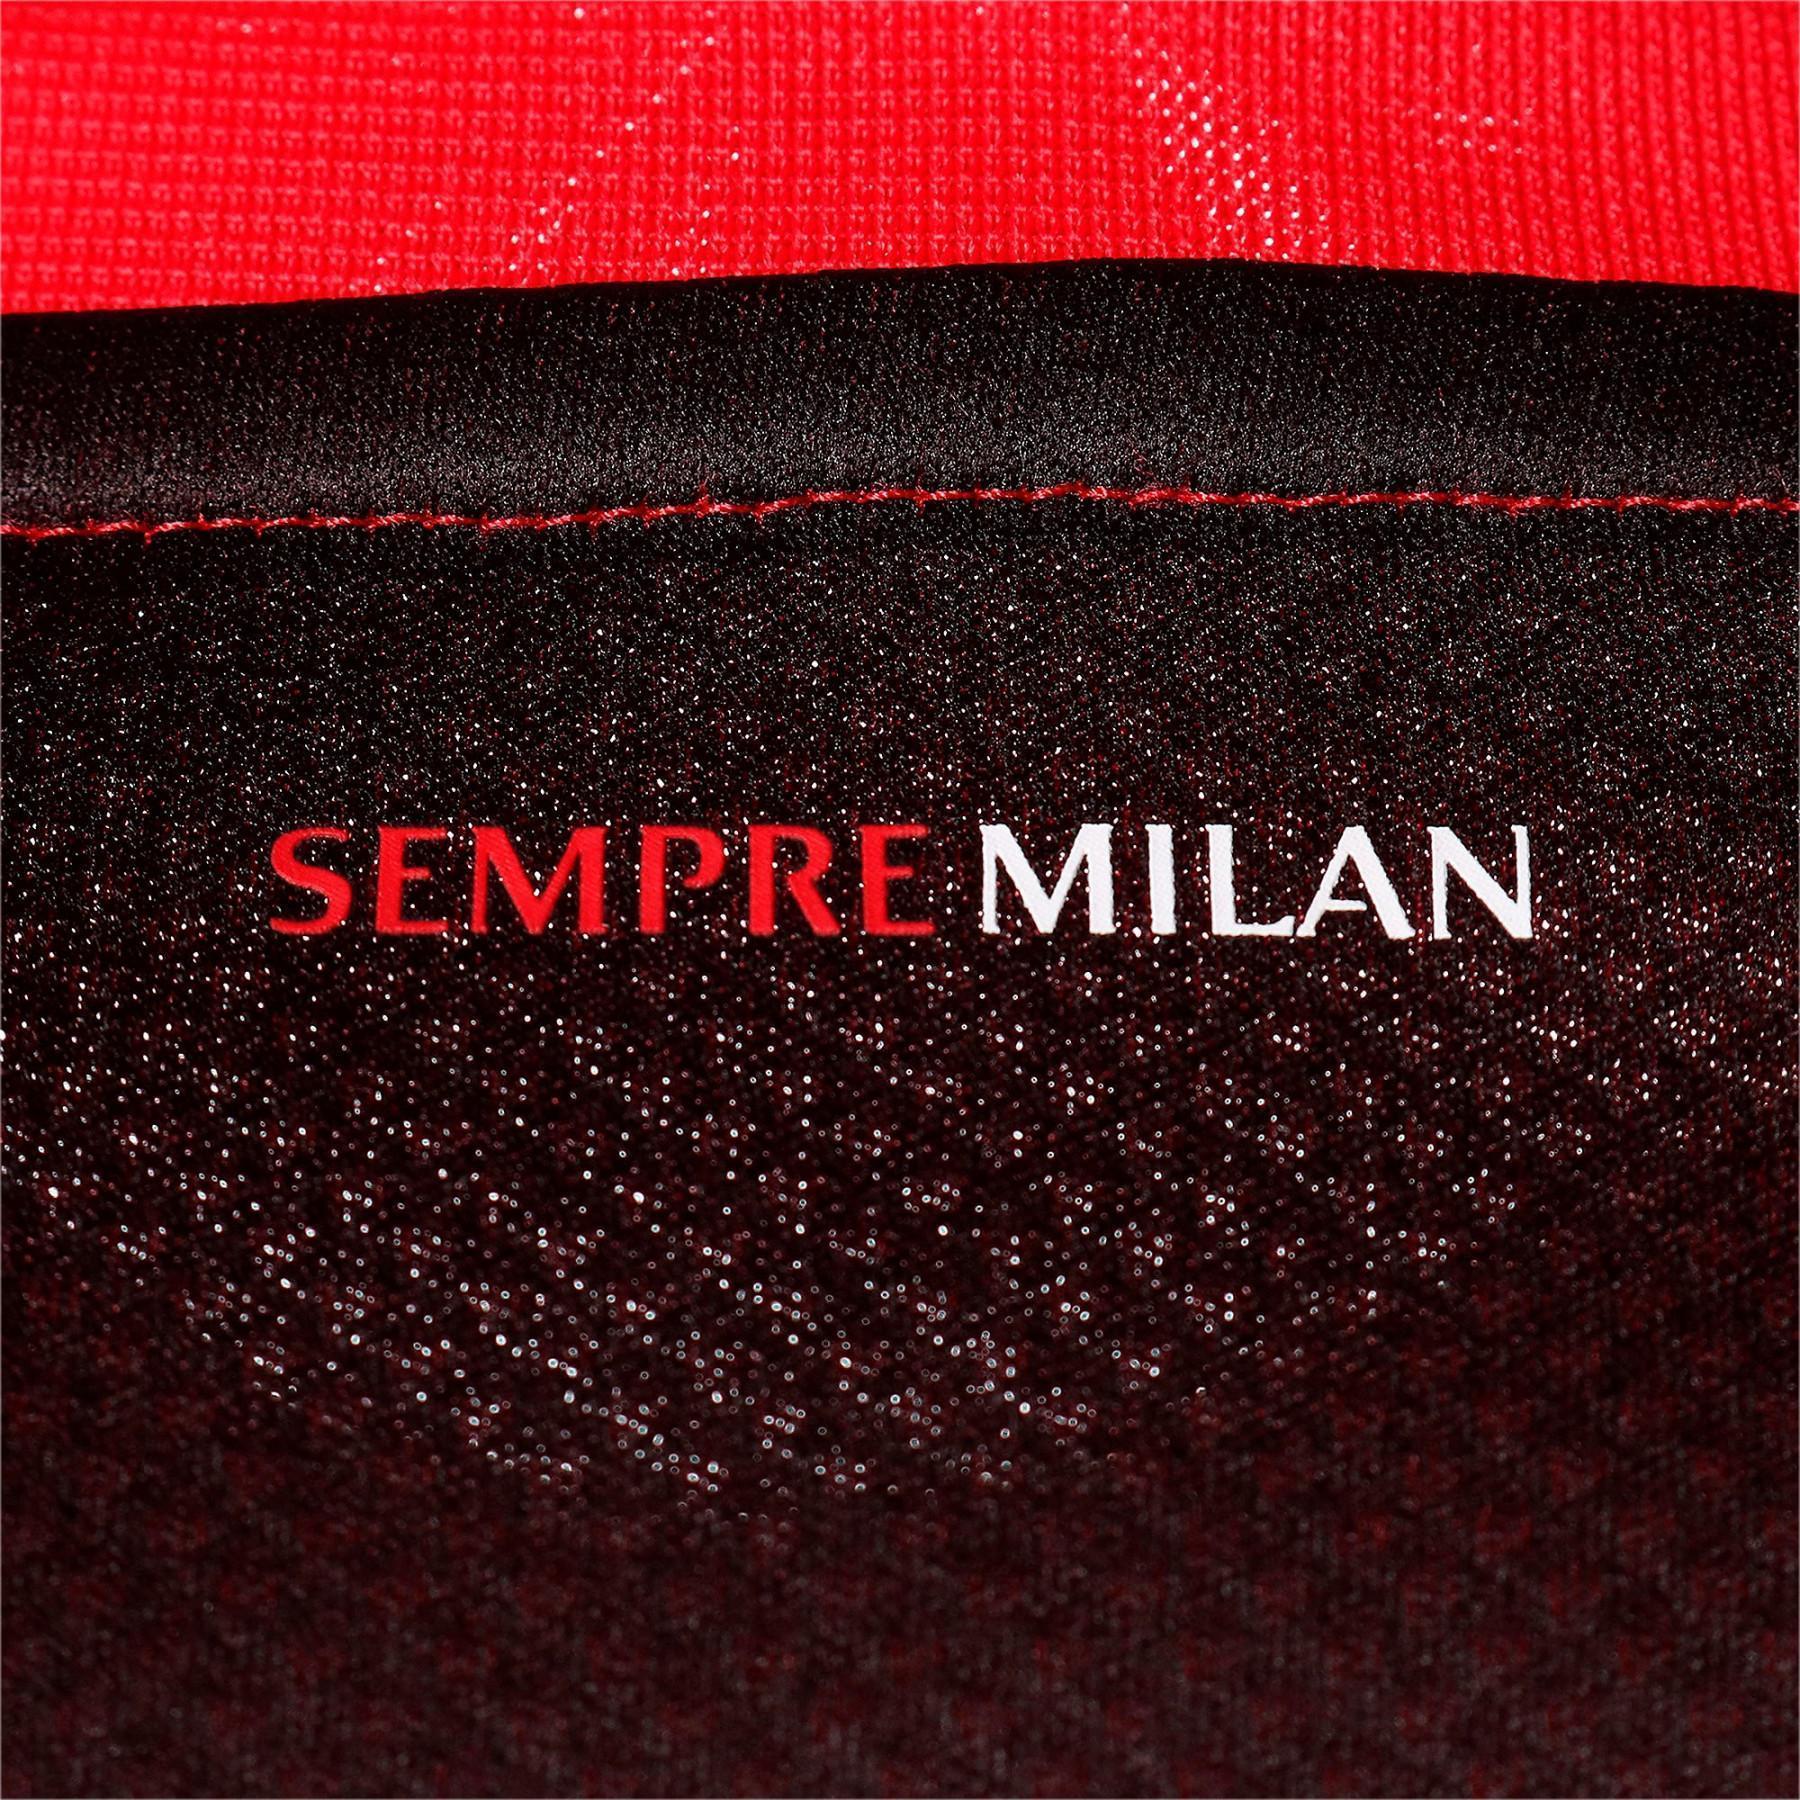 Camiseta primera equipación Milan AC 2021/22